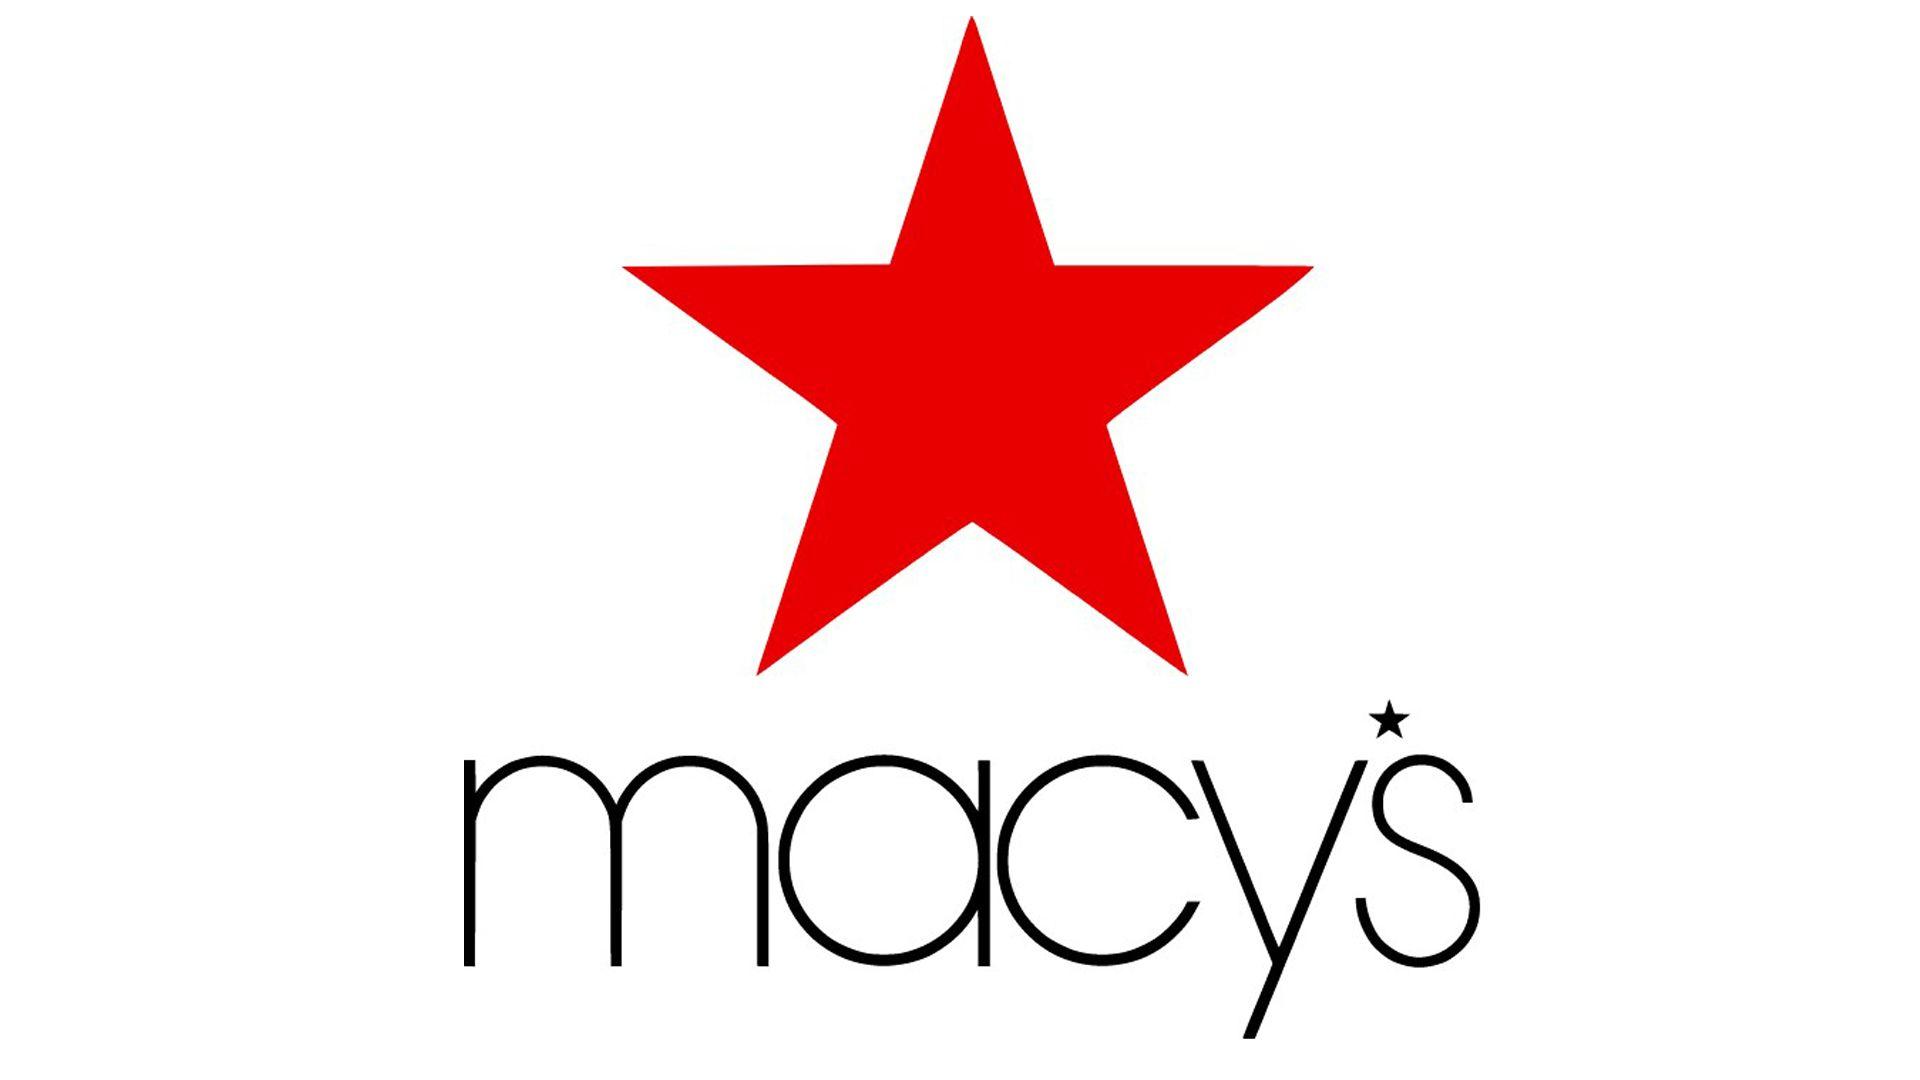 Big Red Apostrophe Logo - Macys Logo, Macys Symbol, Meaning, History and Evolution